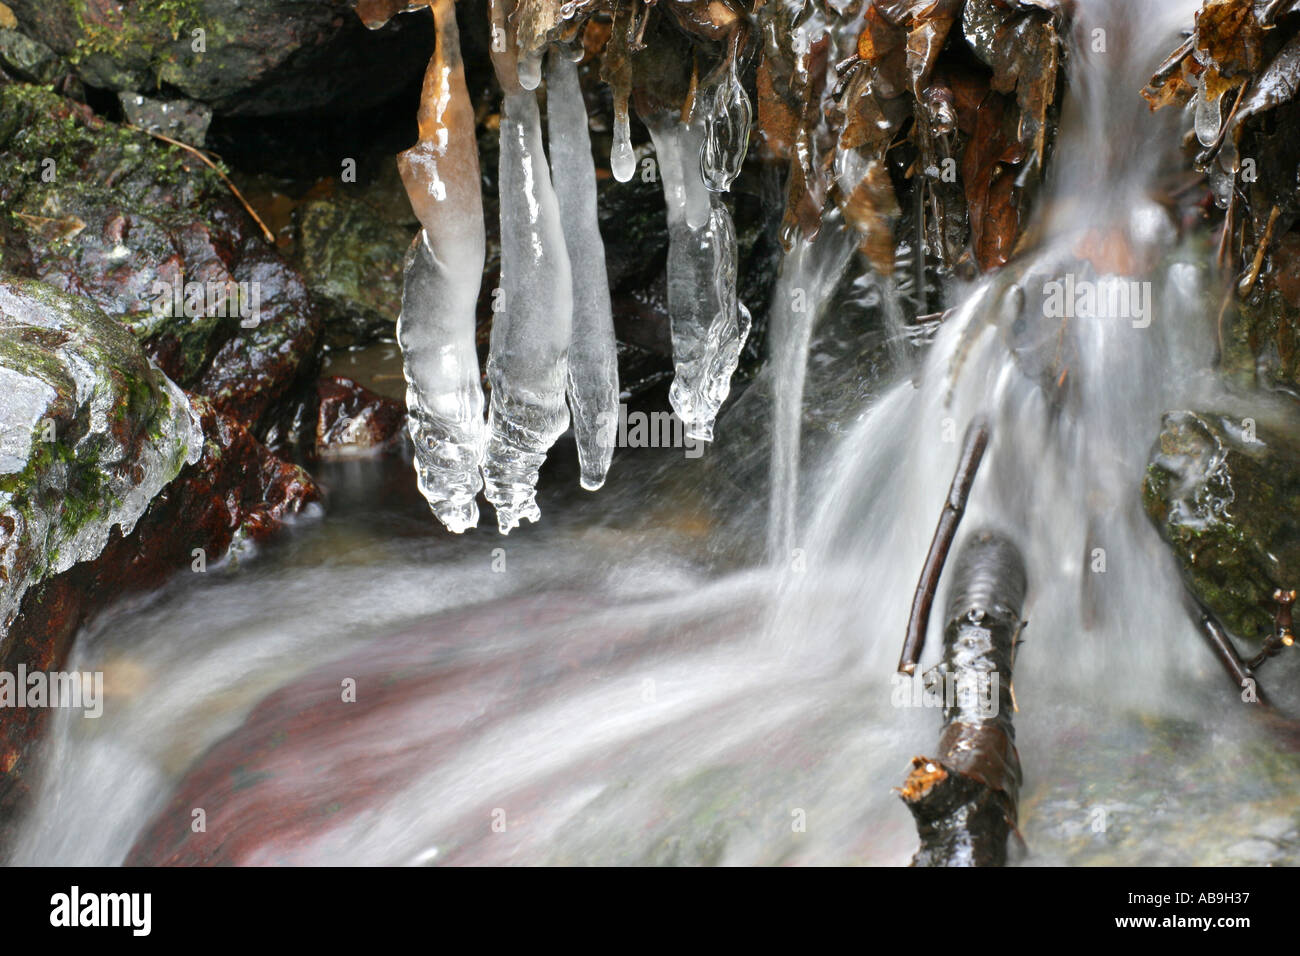 icicles in a brook, Germany, Vogtland, Jocketa, Dec 04. Stock Photo